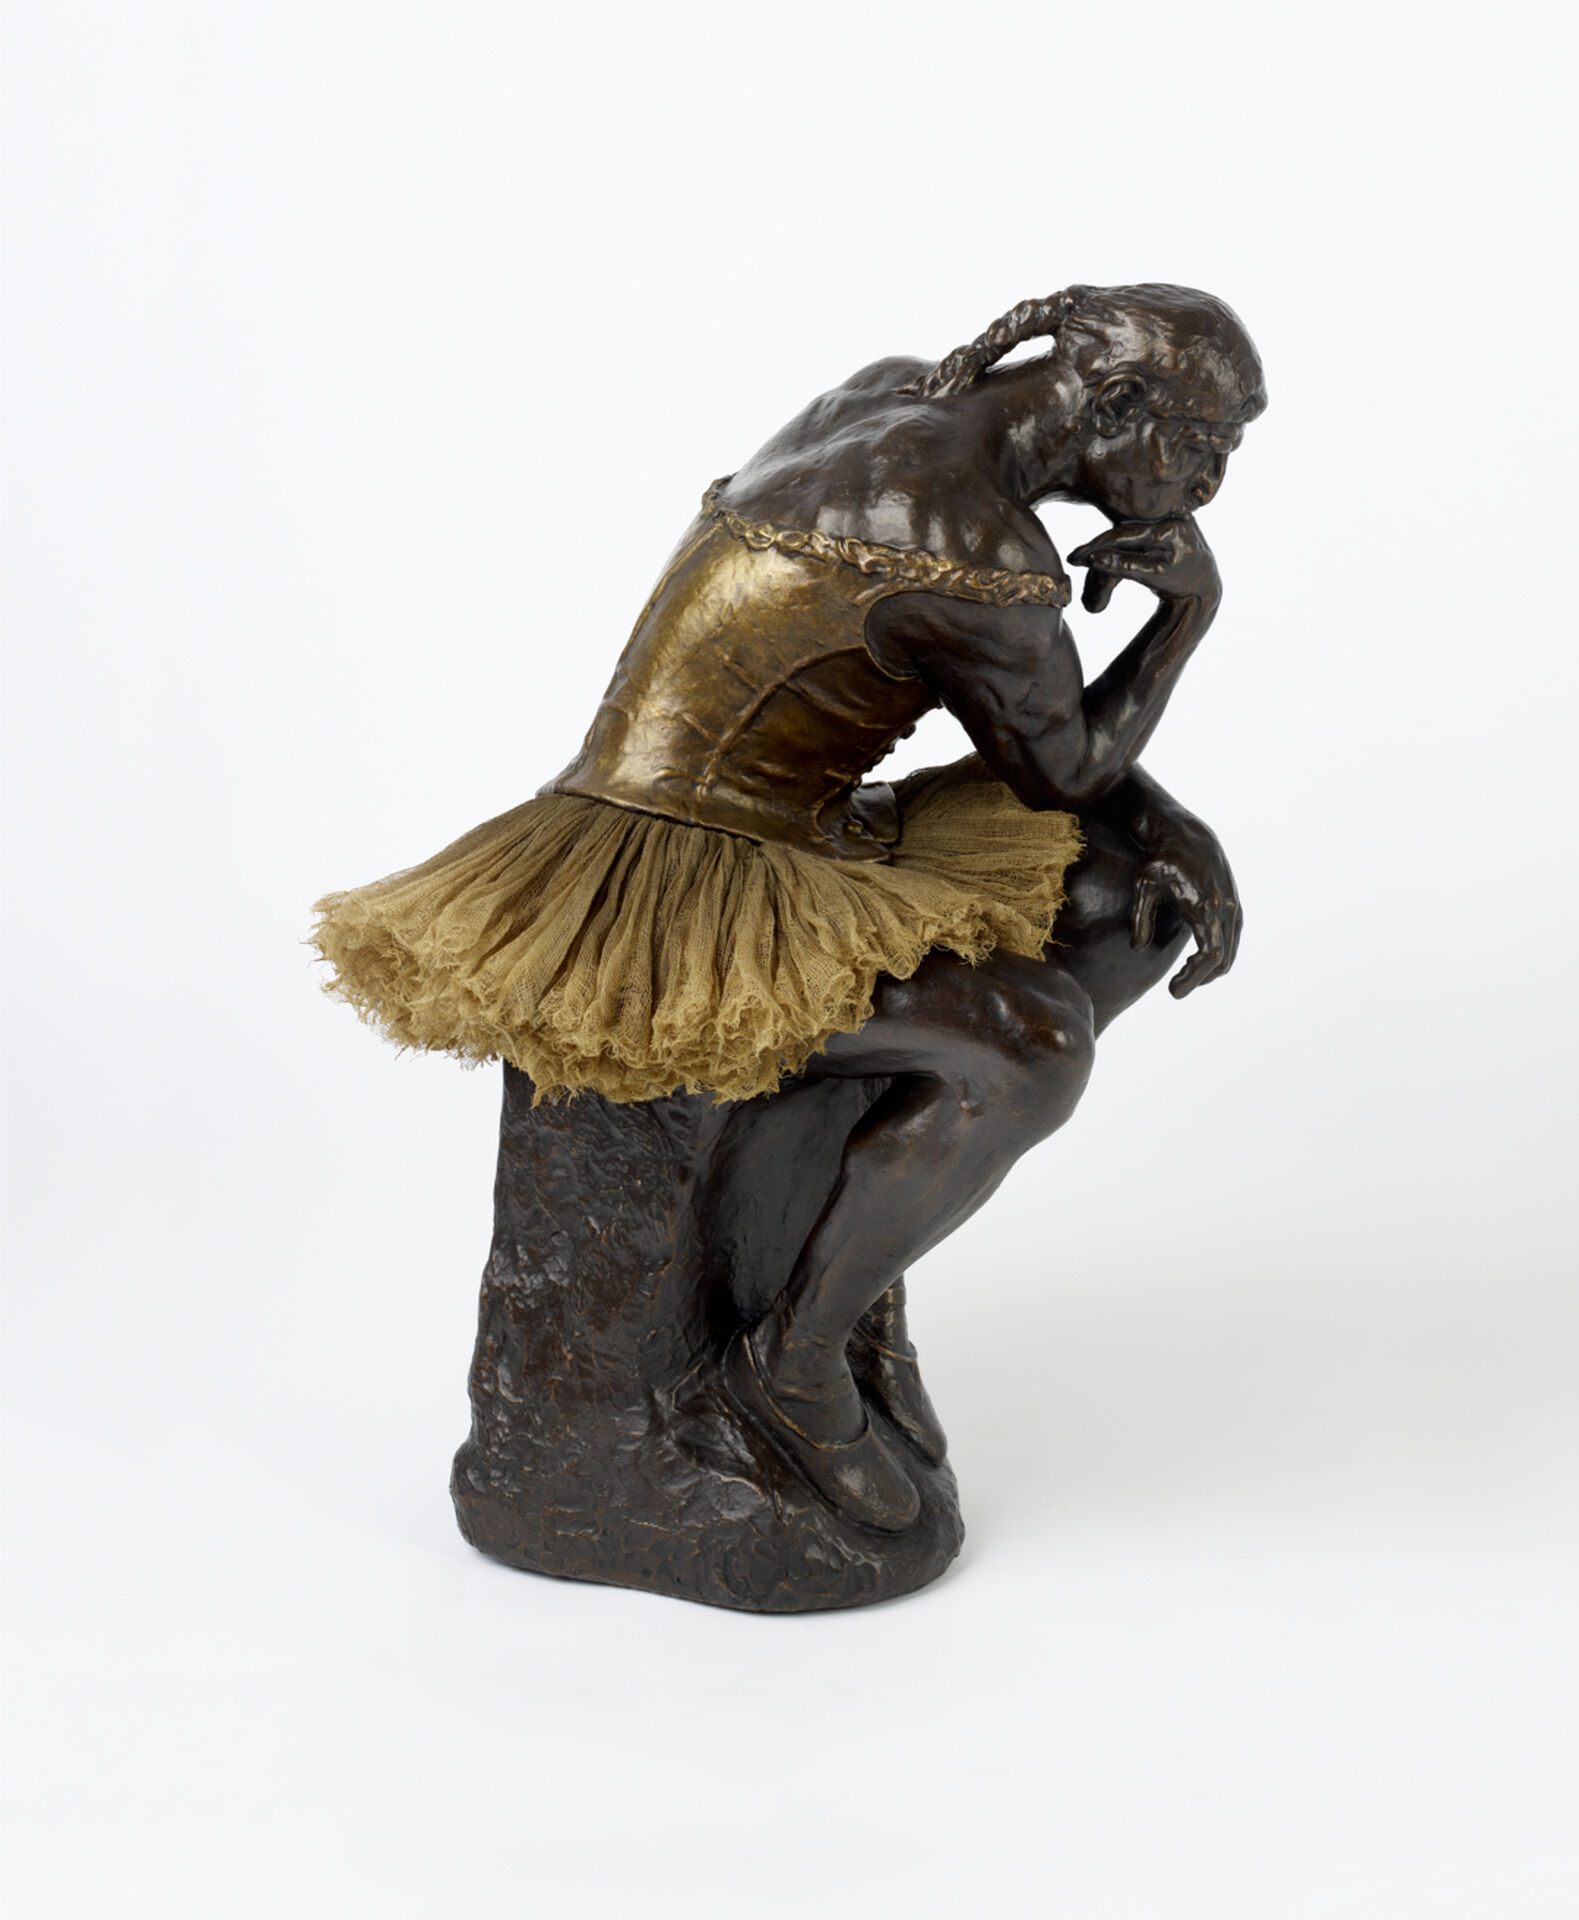 Nancy Fouts, Tänkaren (efter Rodin/Degas), 2014. Brons och florstyg. Nancy Fouts’ Private Collection. © Nancy Fouts. Photo: Dominic Lee.